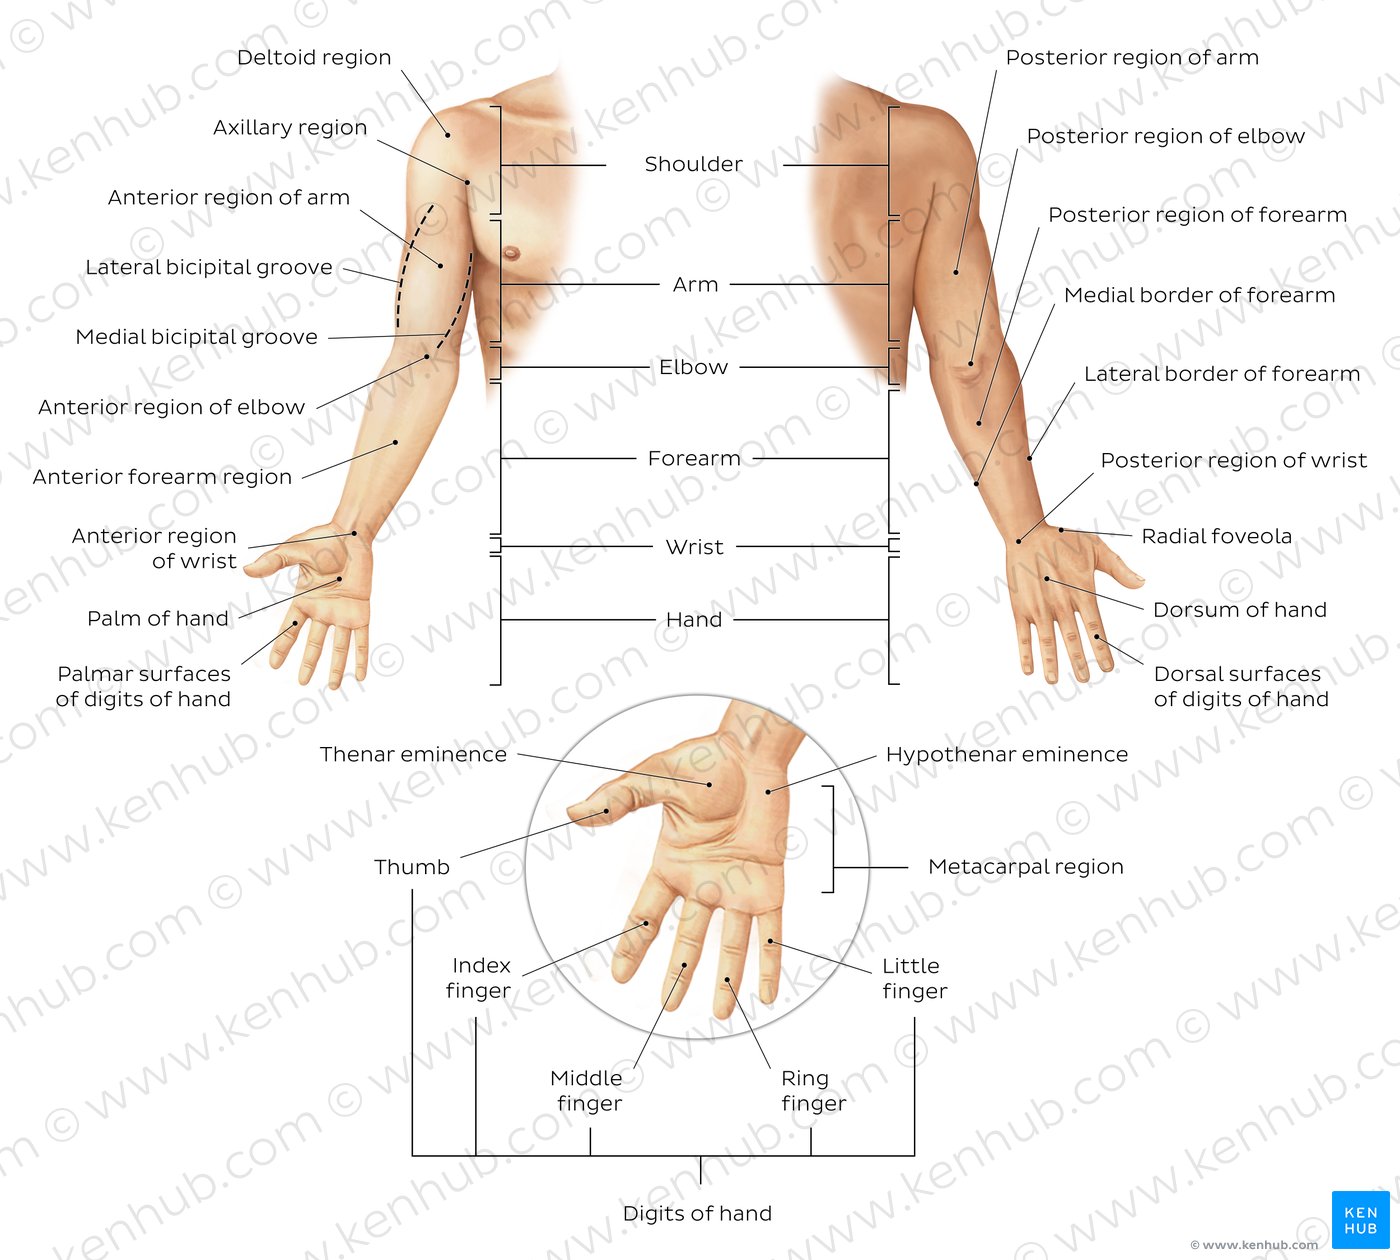 Regions of the upper limb: Anatomy